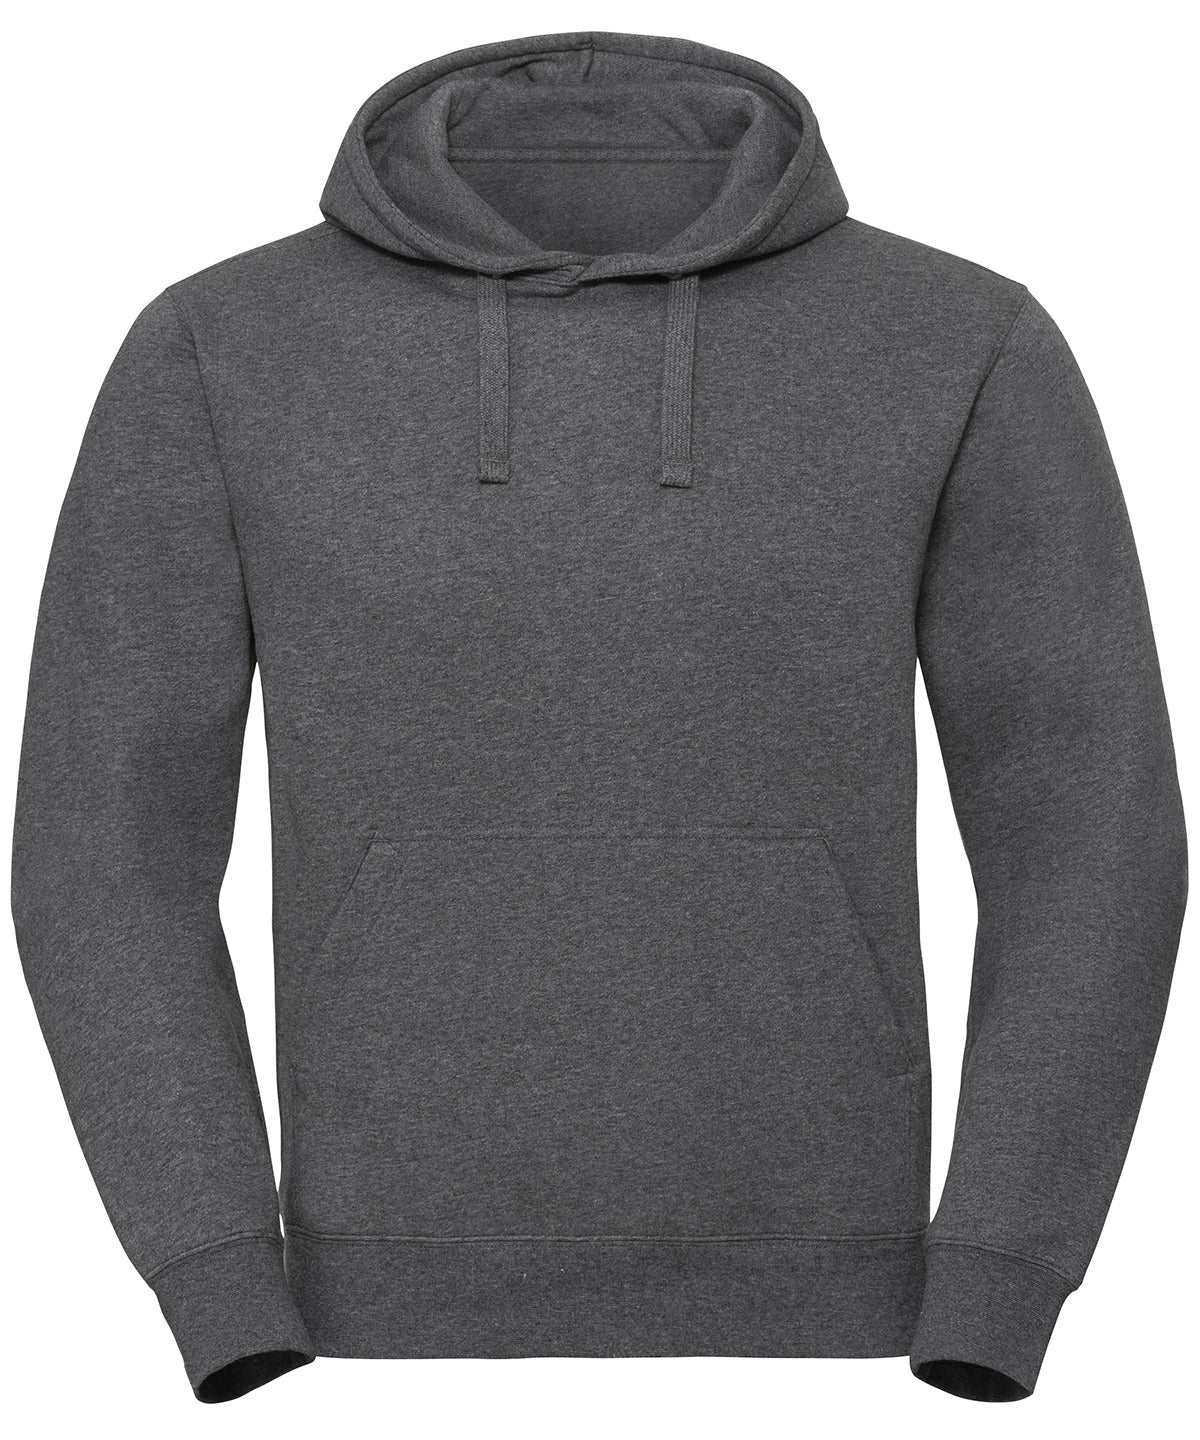 Hettupeysur - Authentic Melange Hooded Sweatshirt